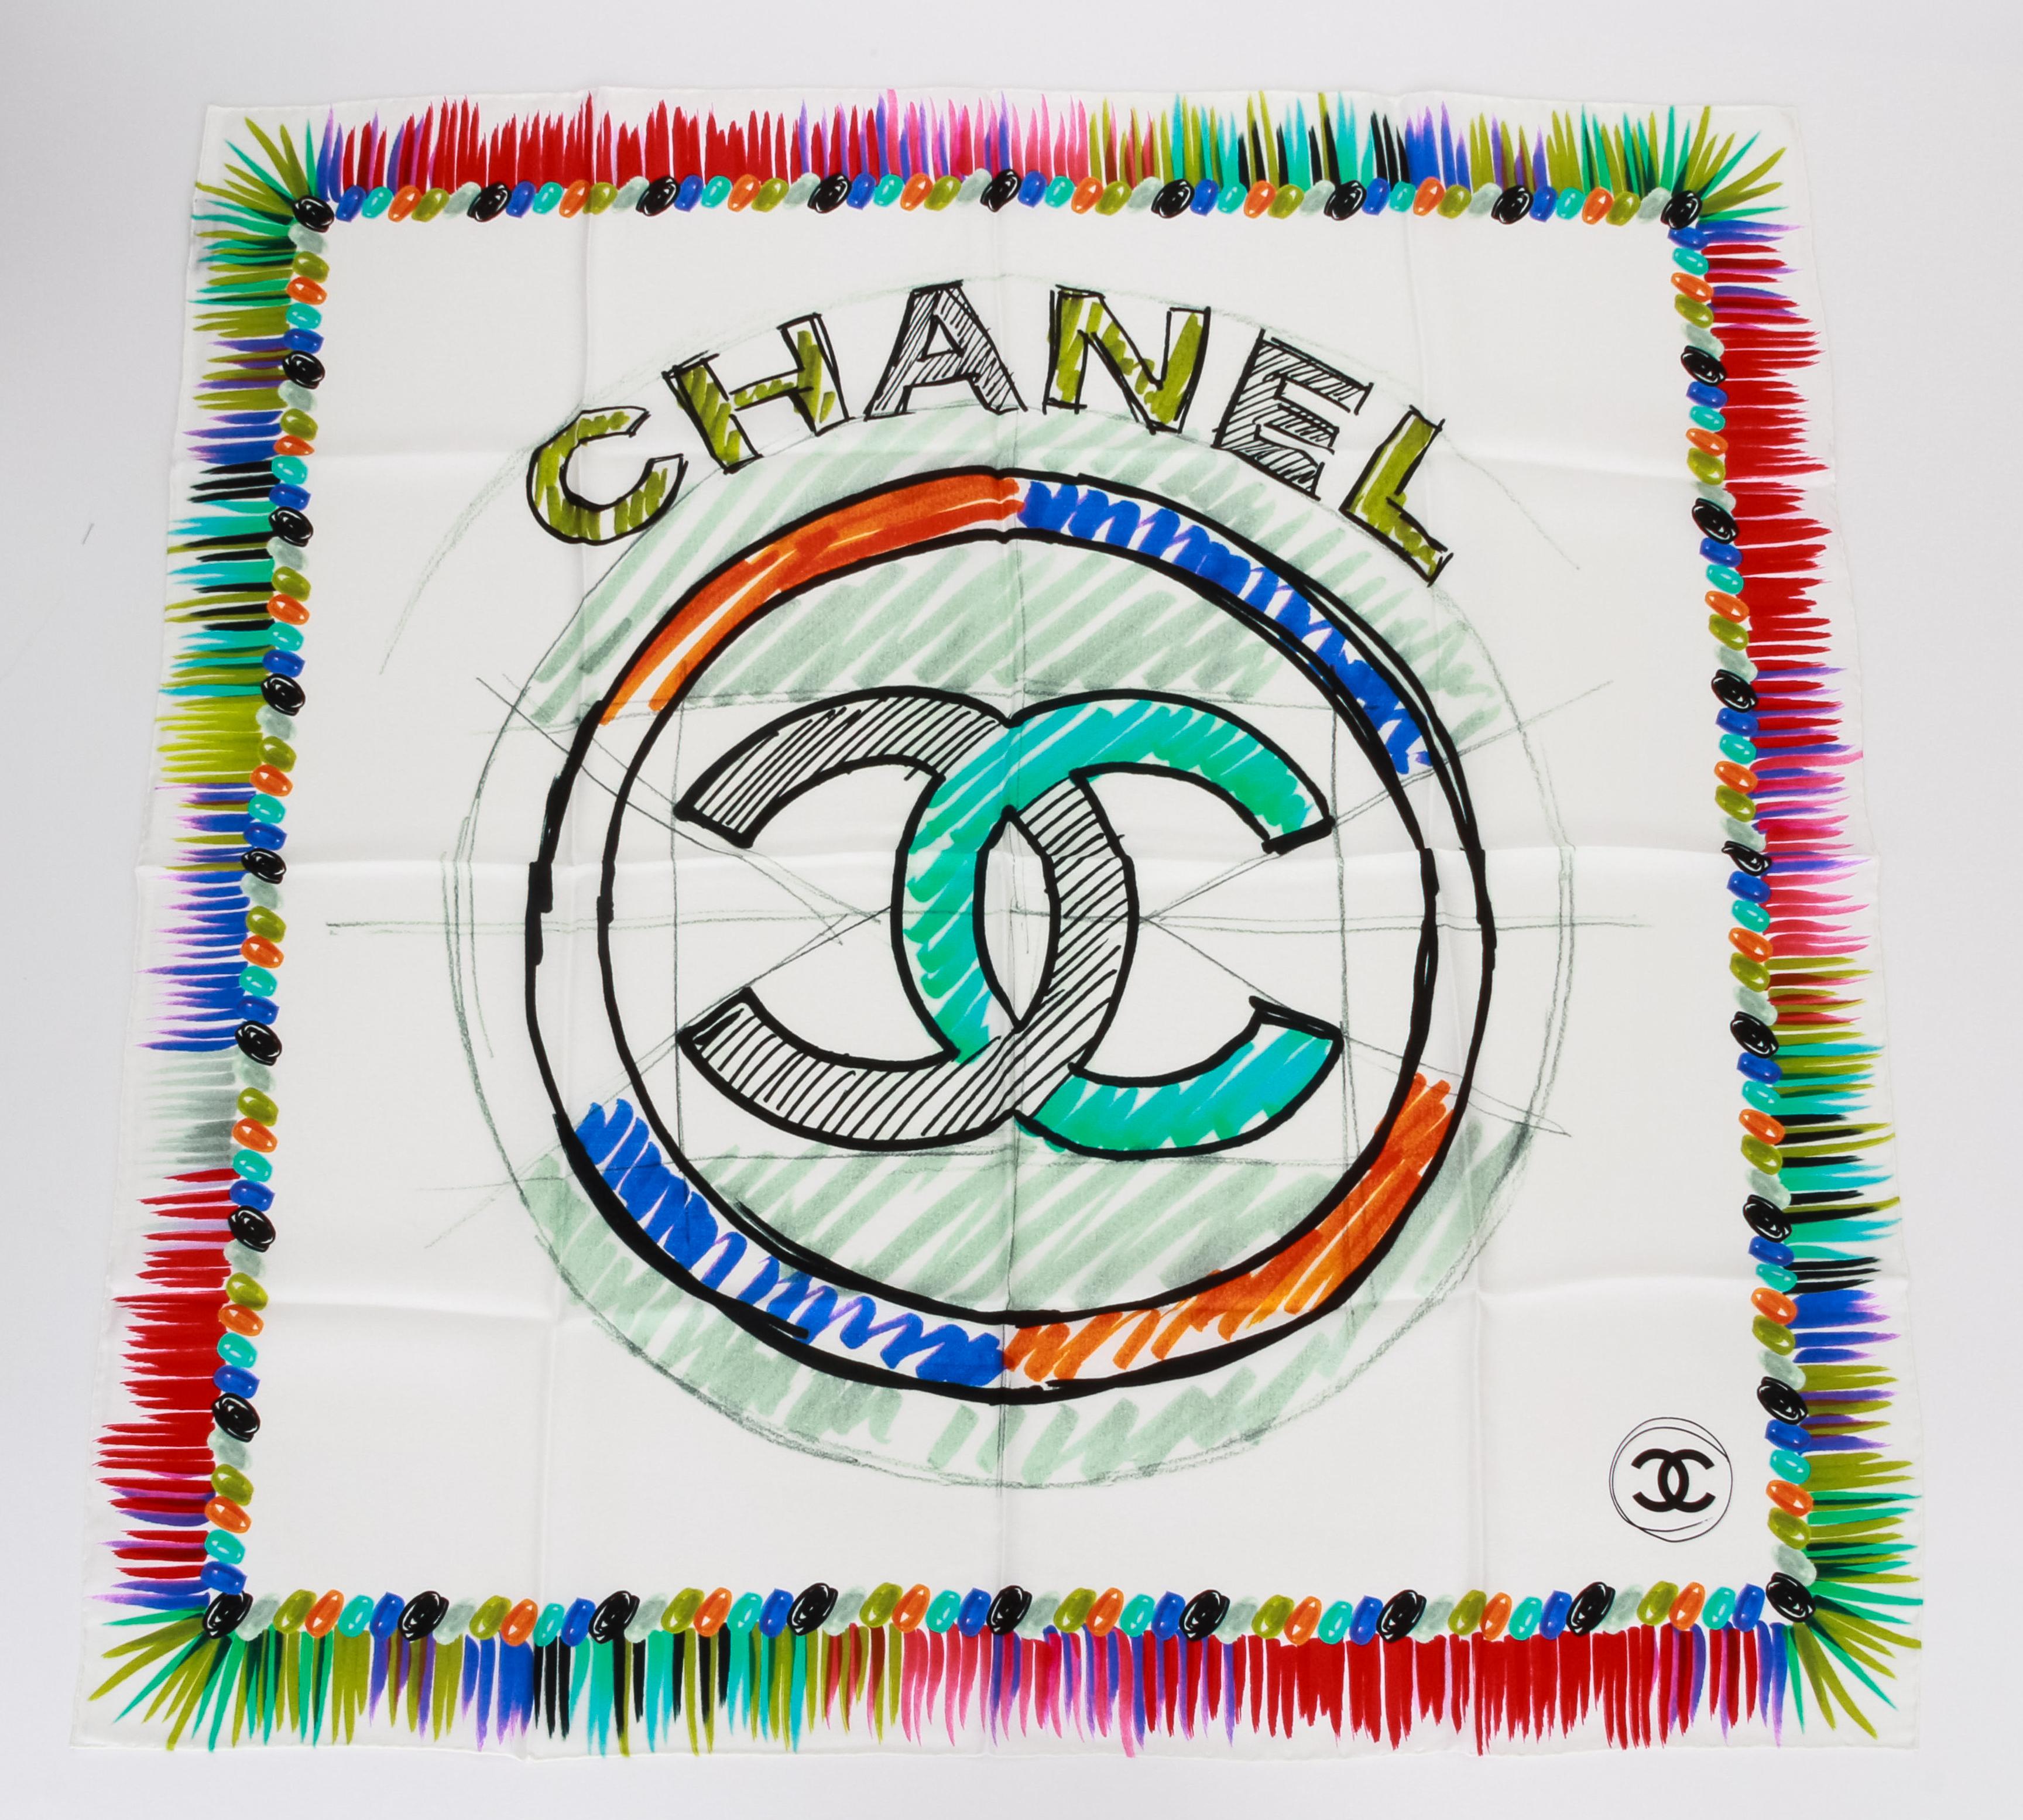 New Chanel White Fringe Paint Stroke Scarf